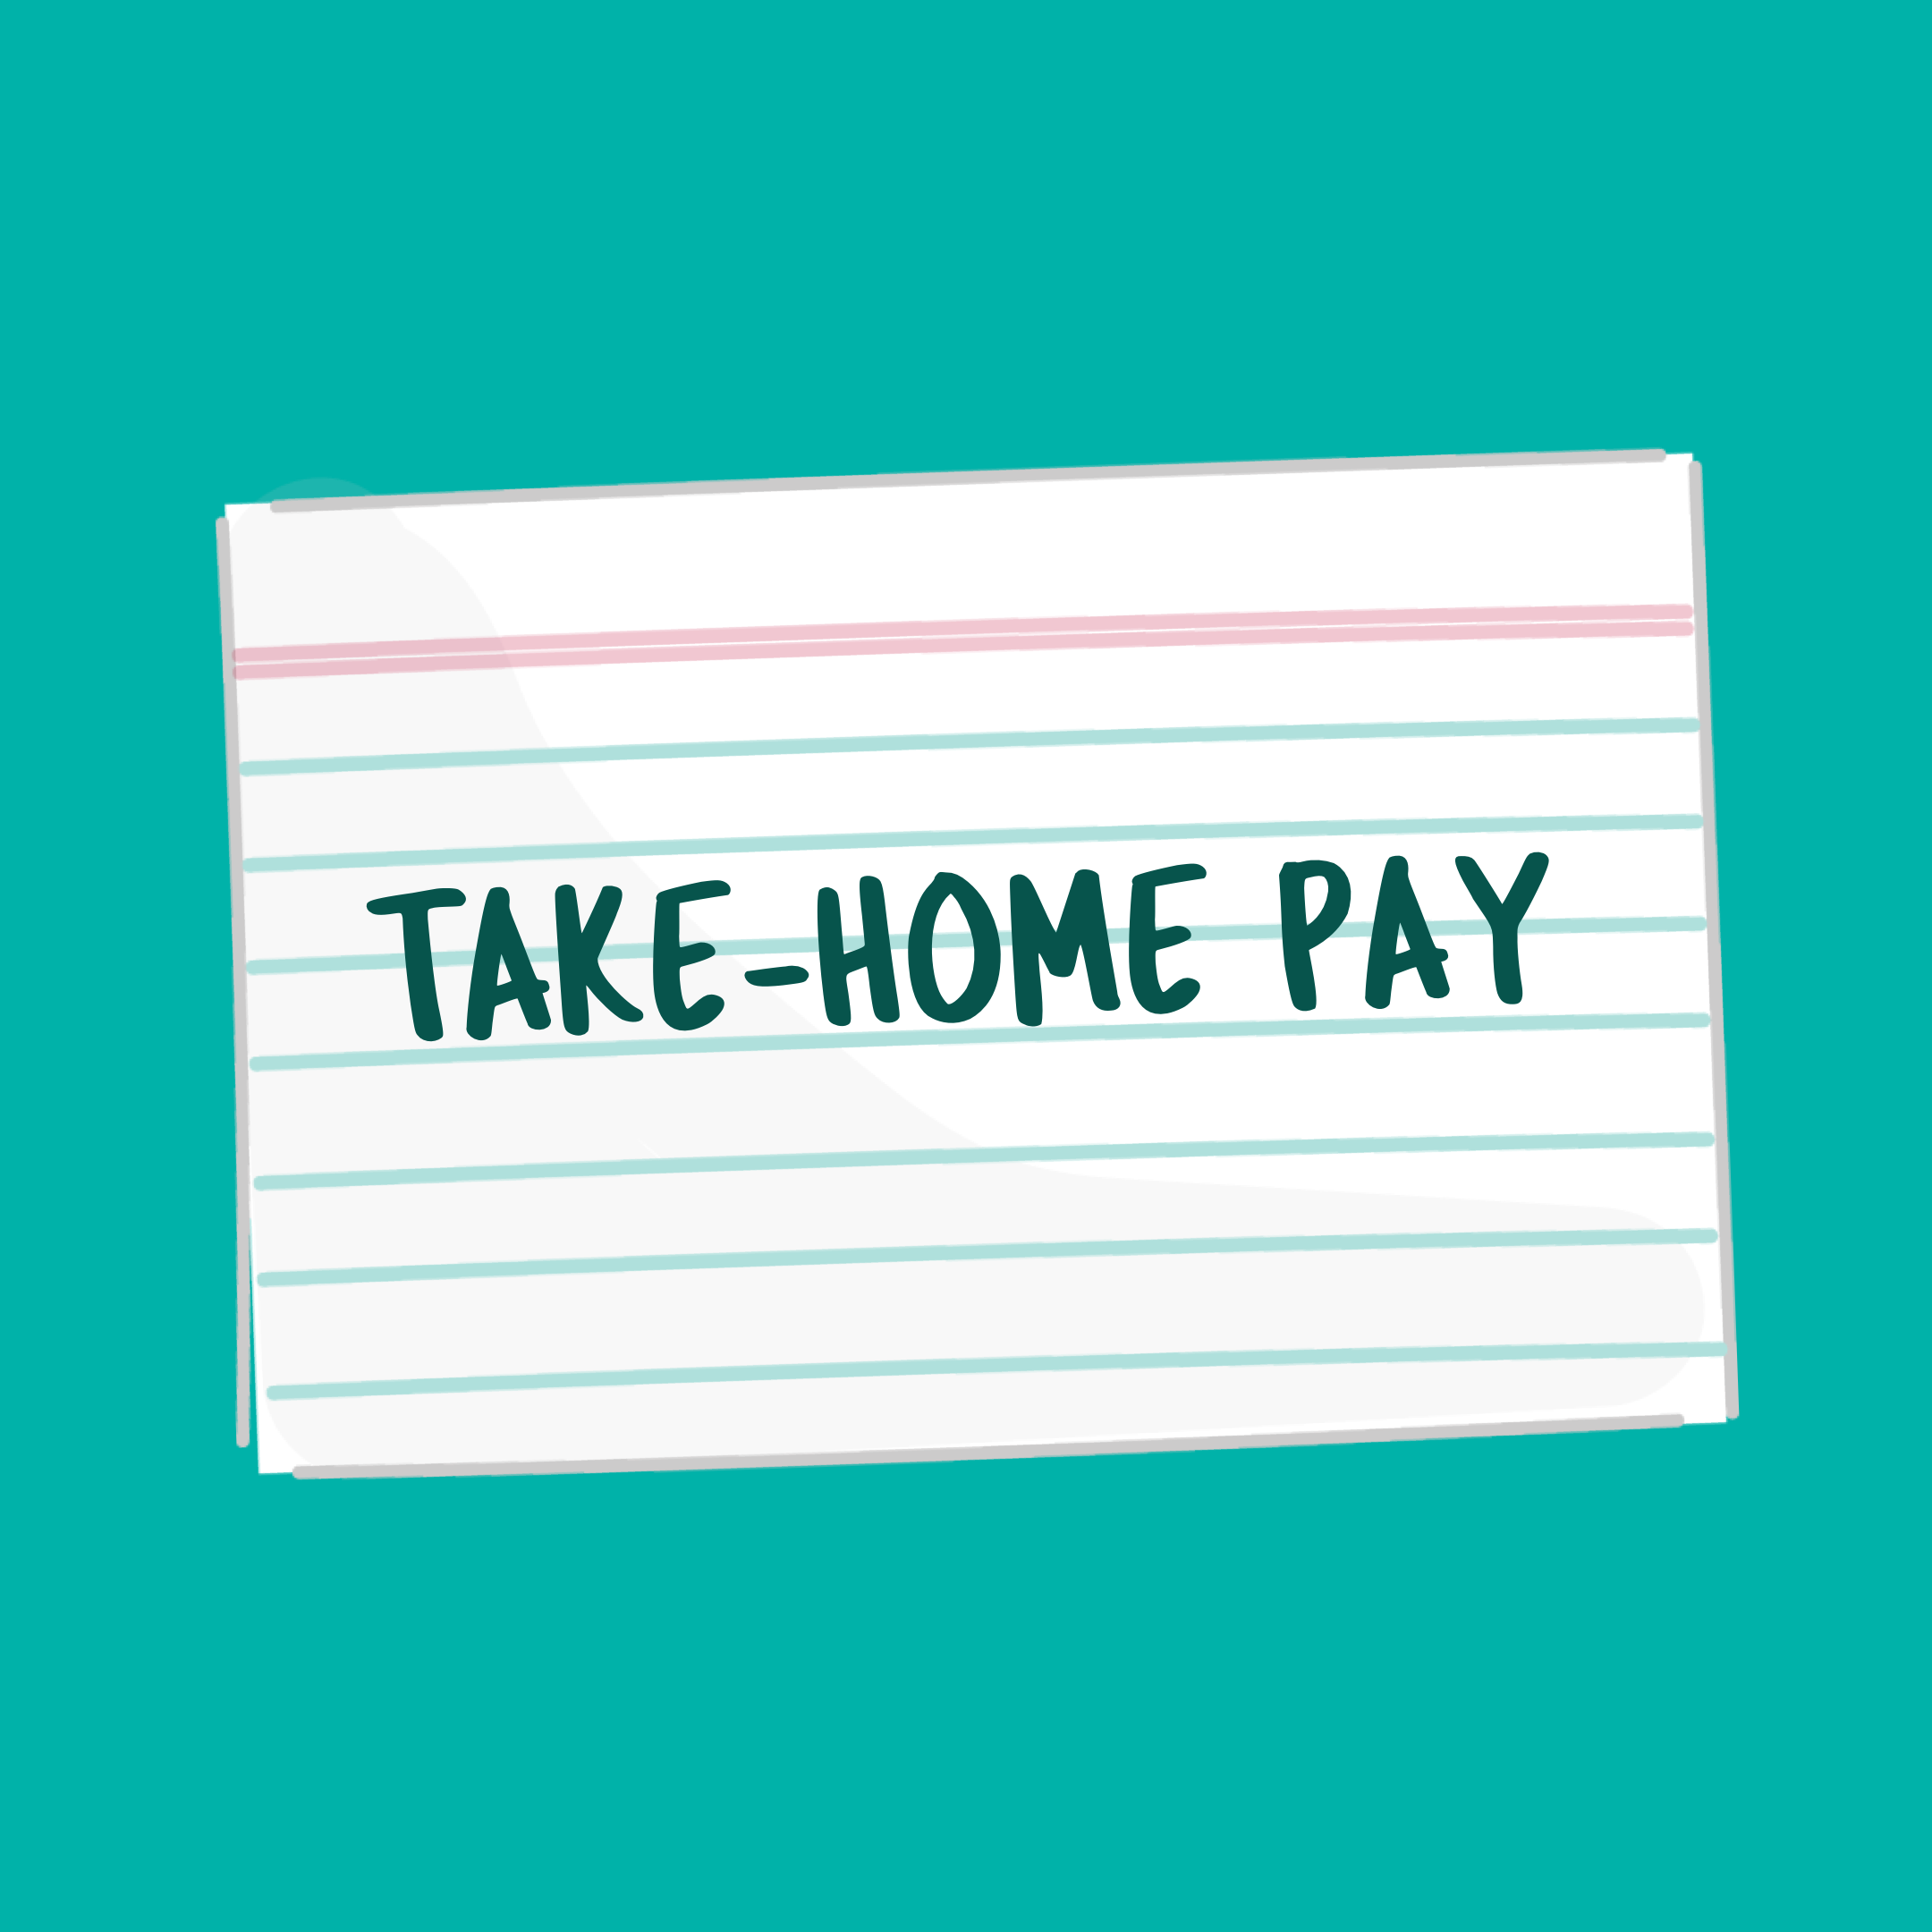 Take-Home Pay card